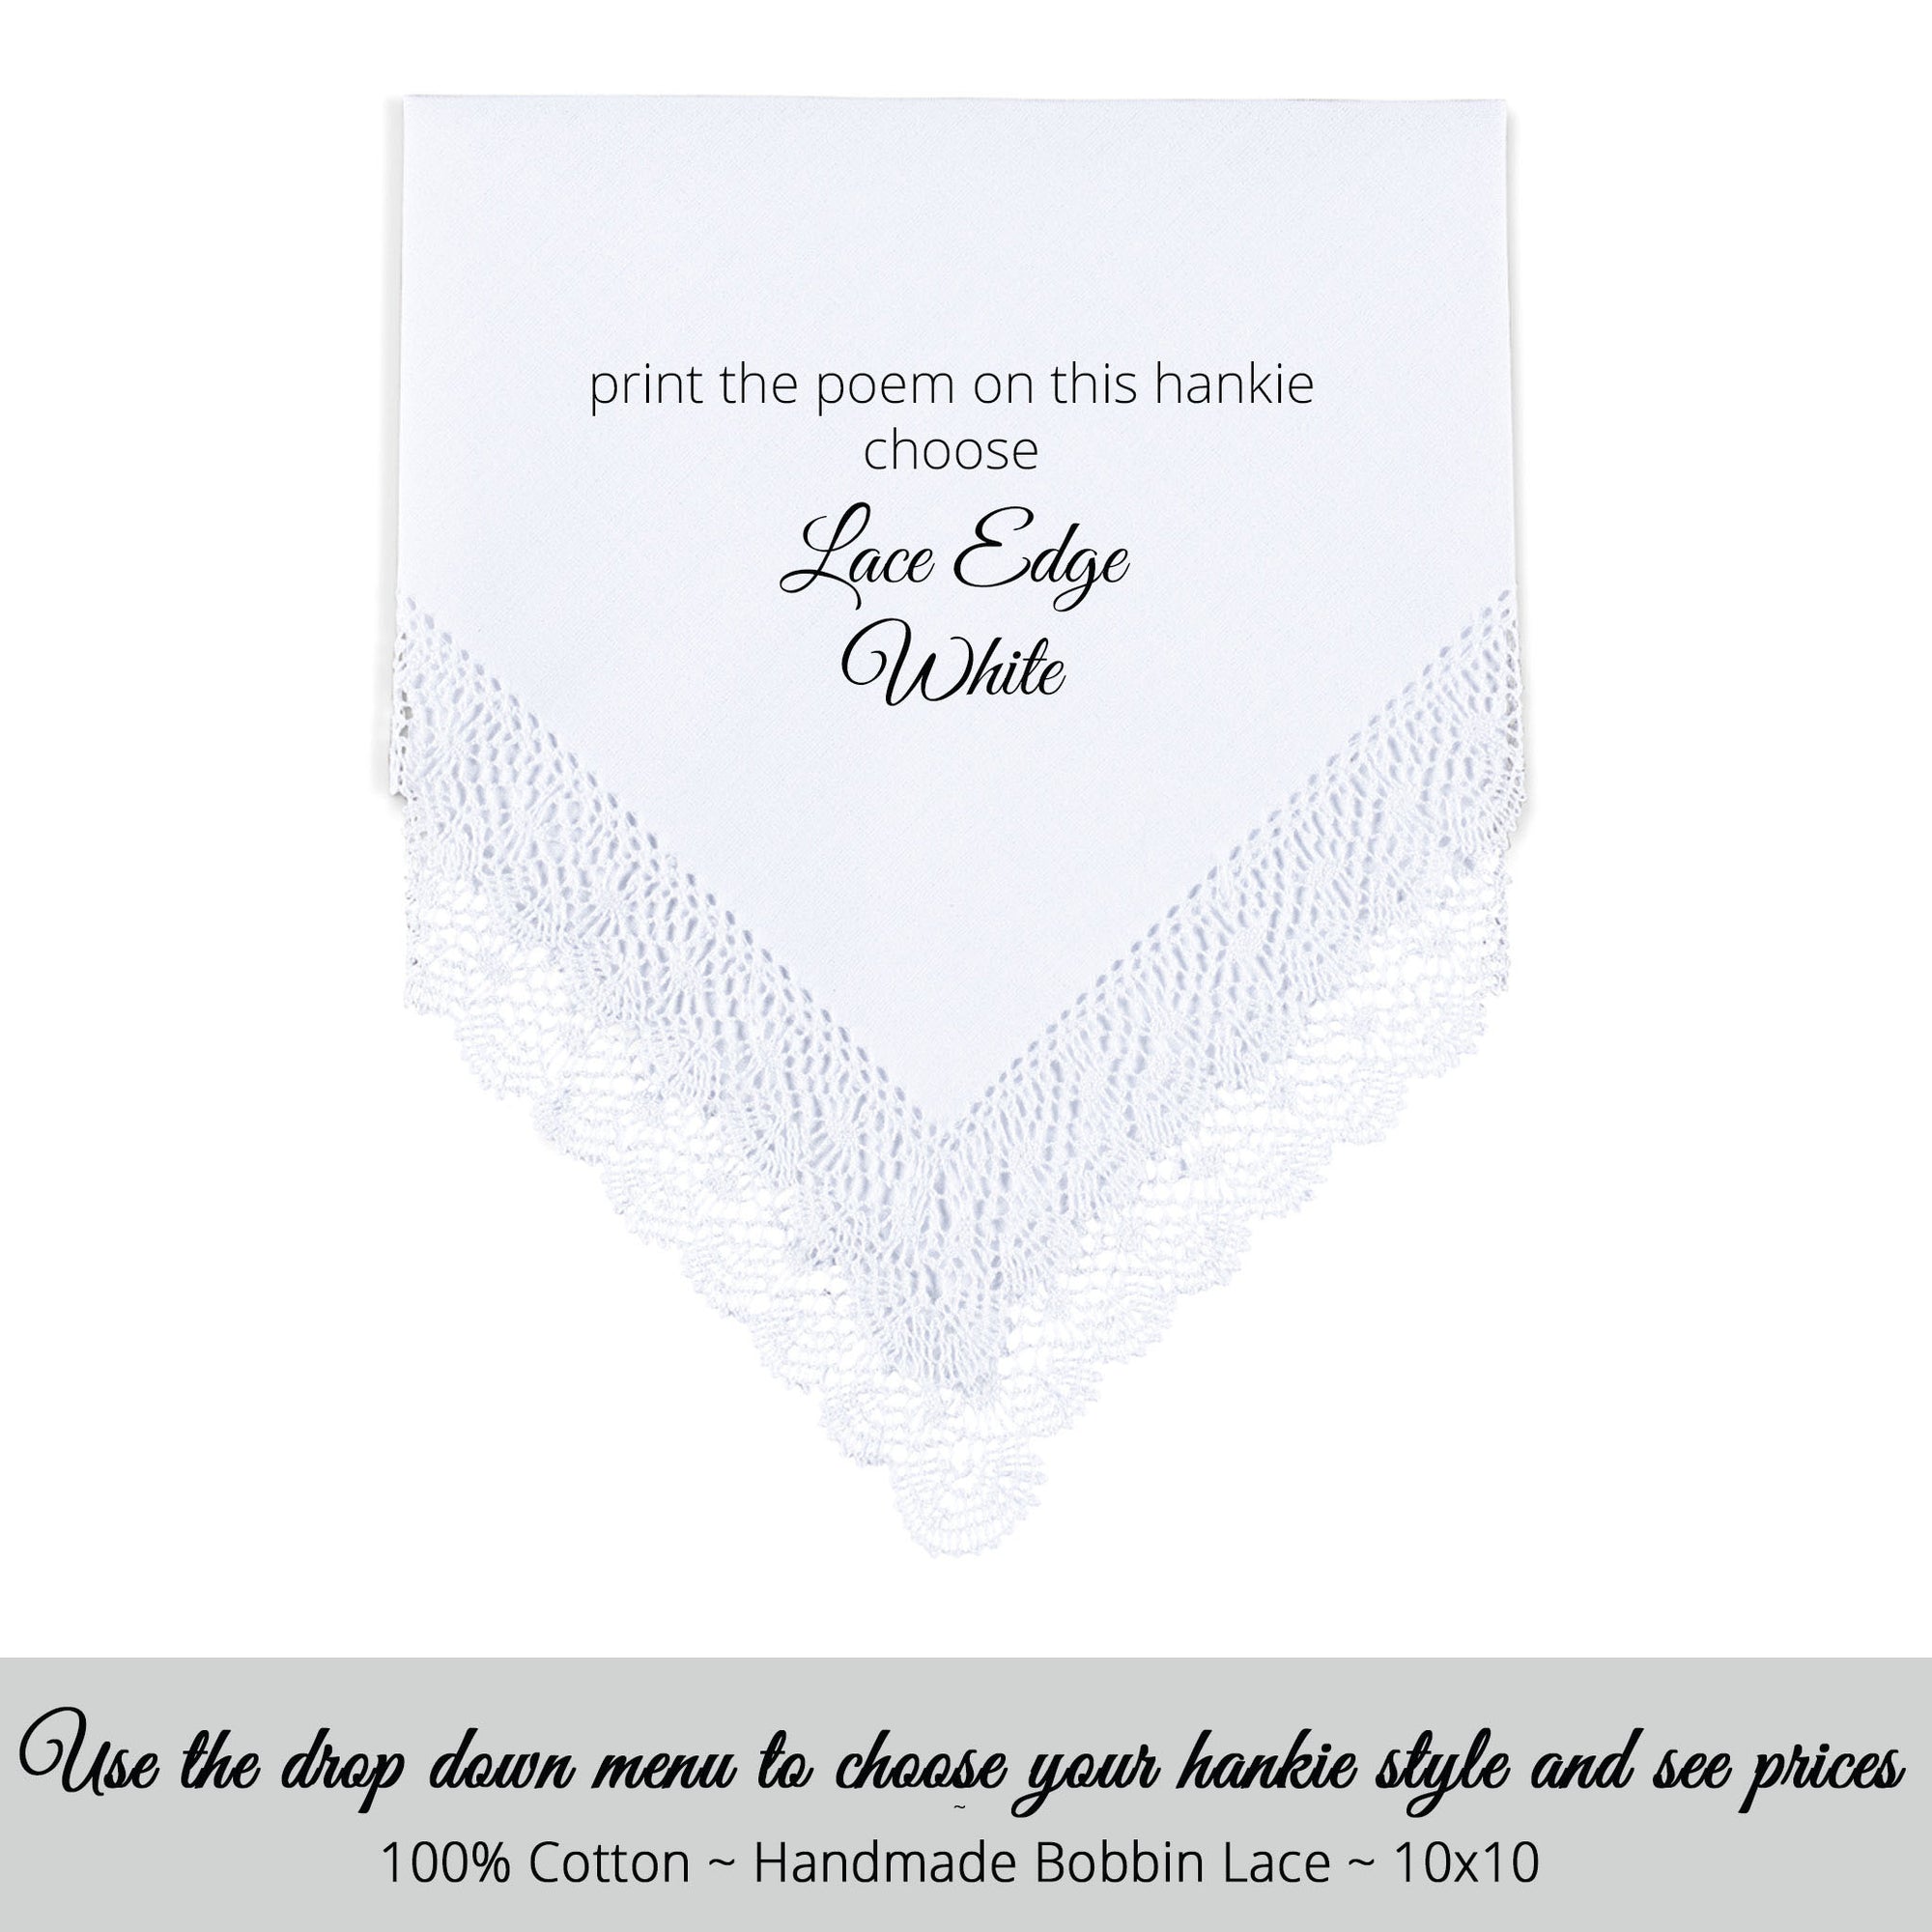 Wedding Handkerchief white with bobbin lace hankie for the bride